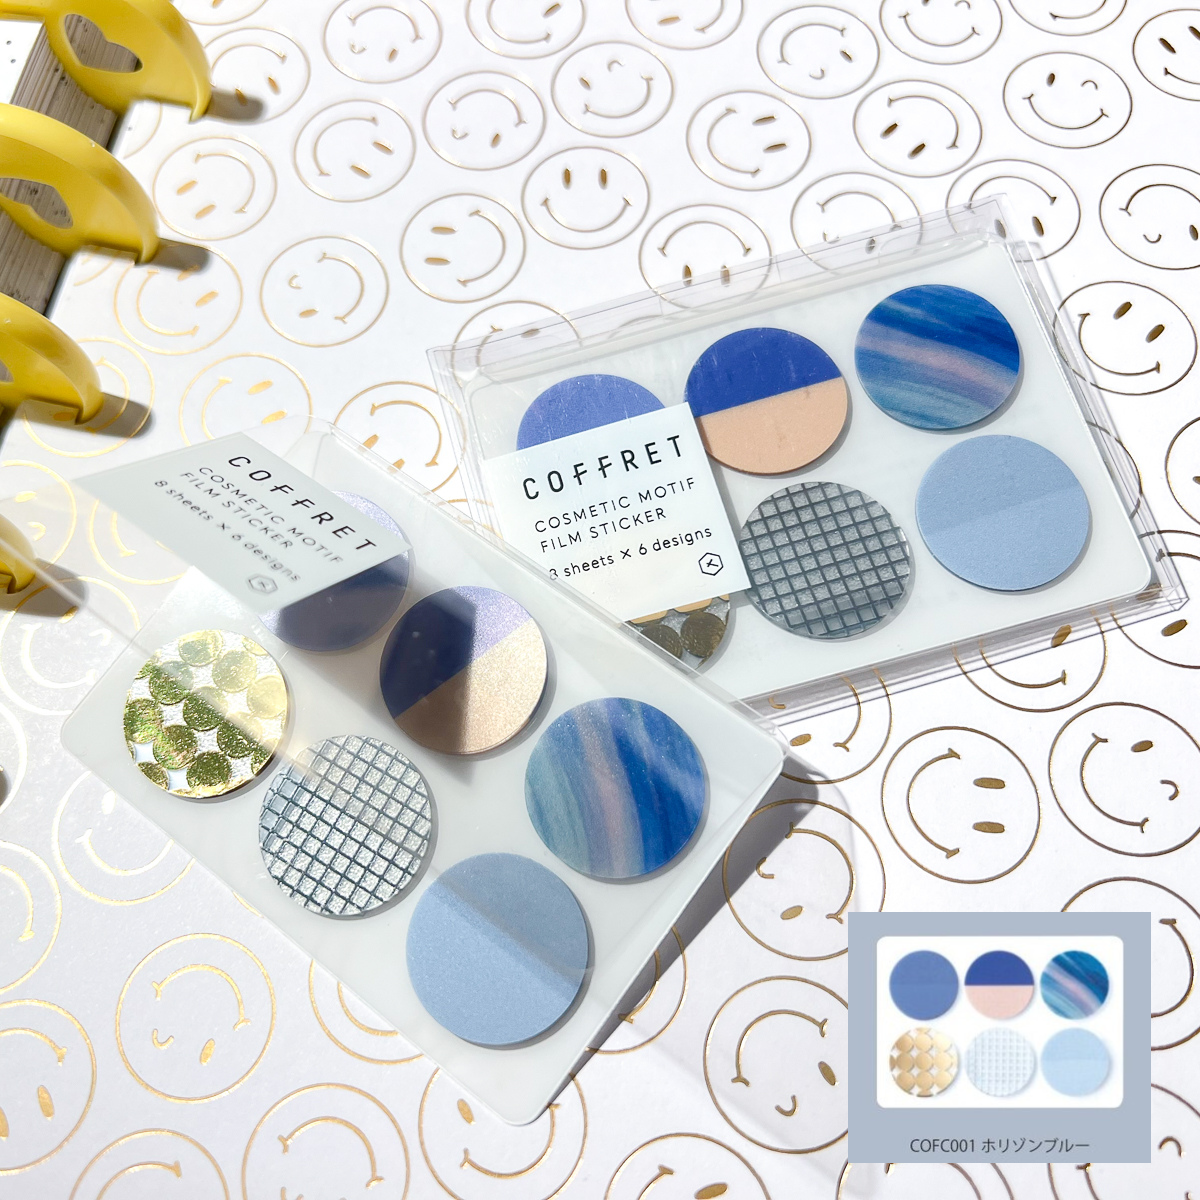 Cosmetic Motif Film Sticker Embellishment - CIRCLE Horizon Blue